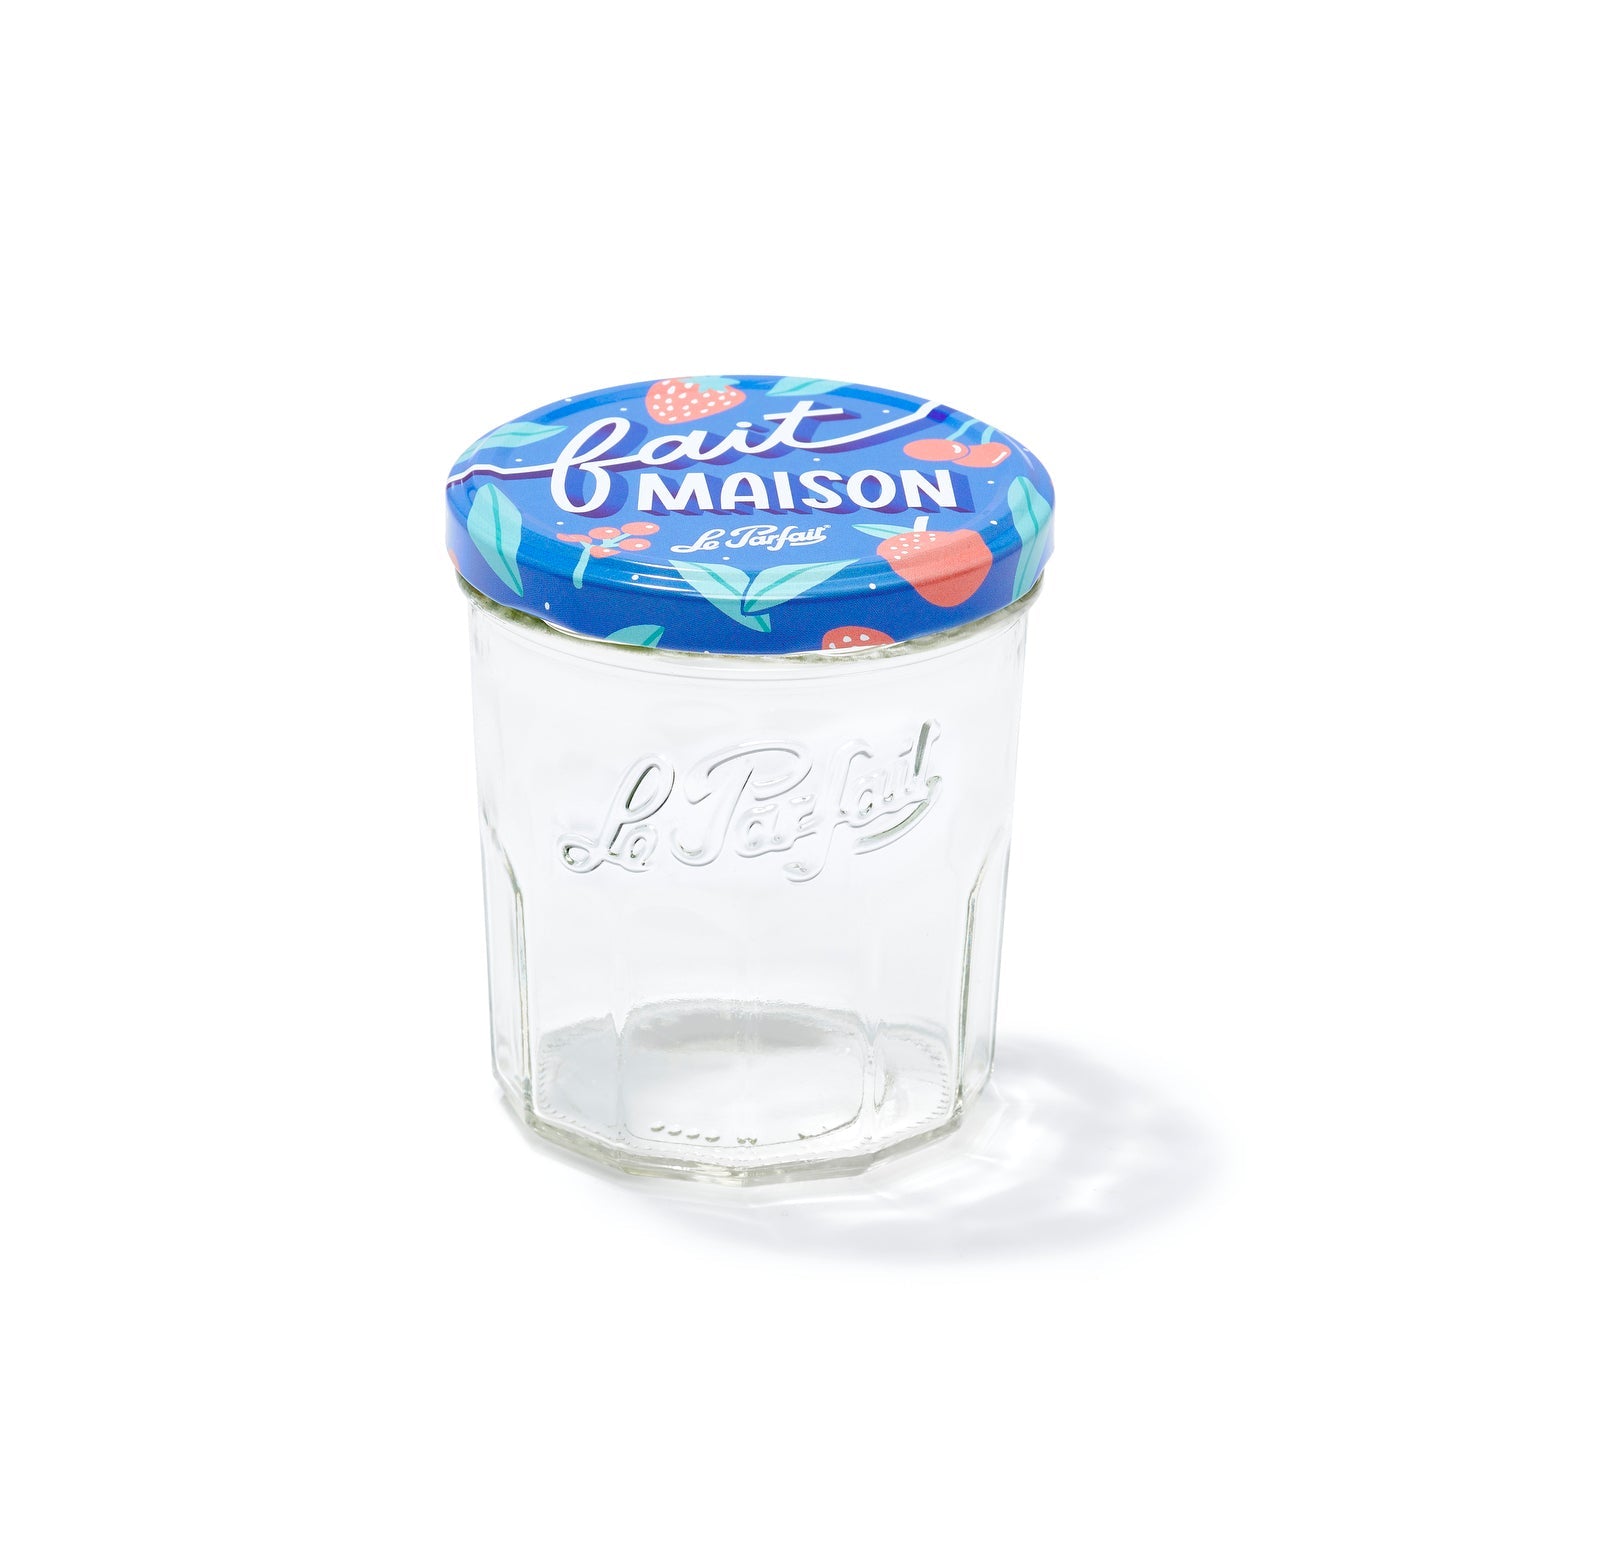 Le Parfait Familia Wiss Terrine - French Glass Mason Jar With 2 Piece Lid  For Canning Storage, 4 pk / 24 fl oz - Fred Meyer